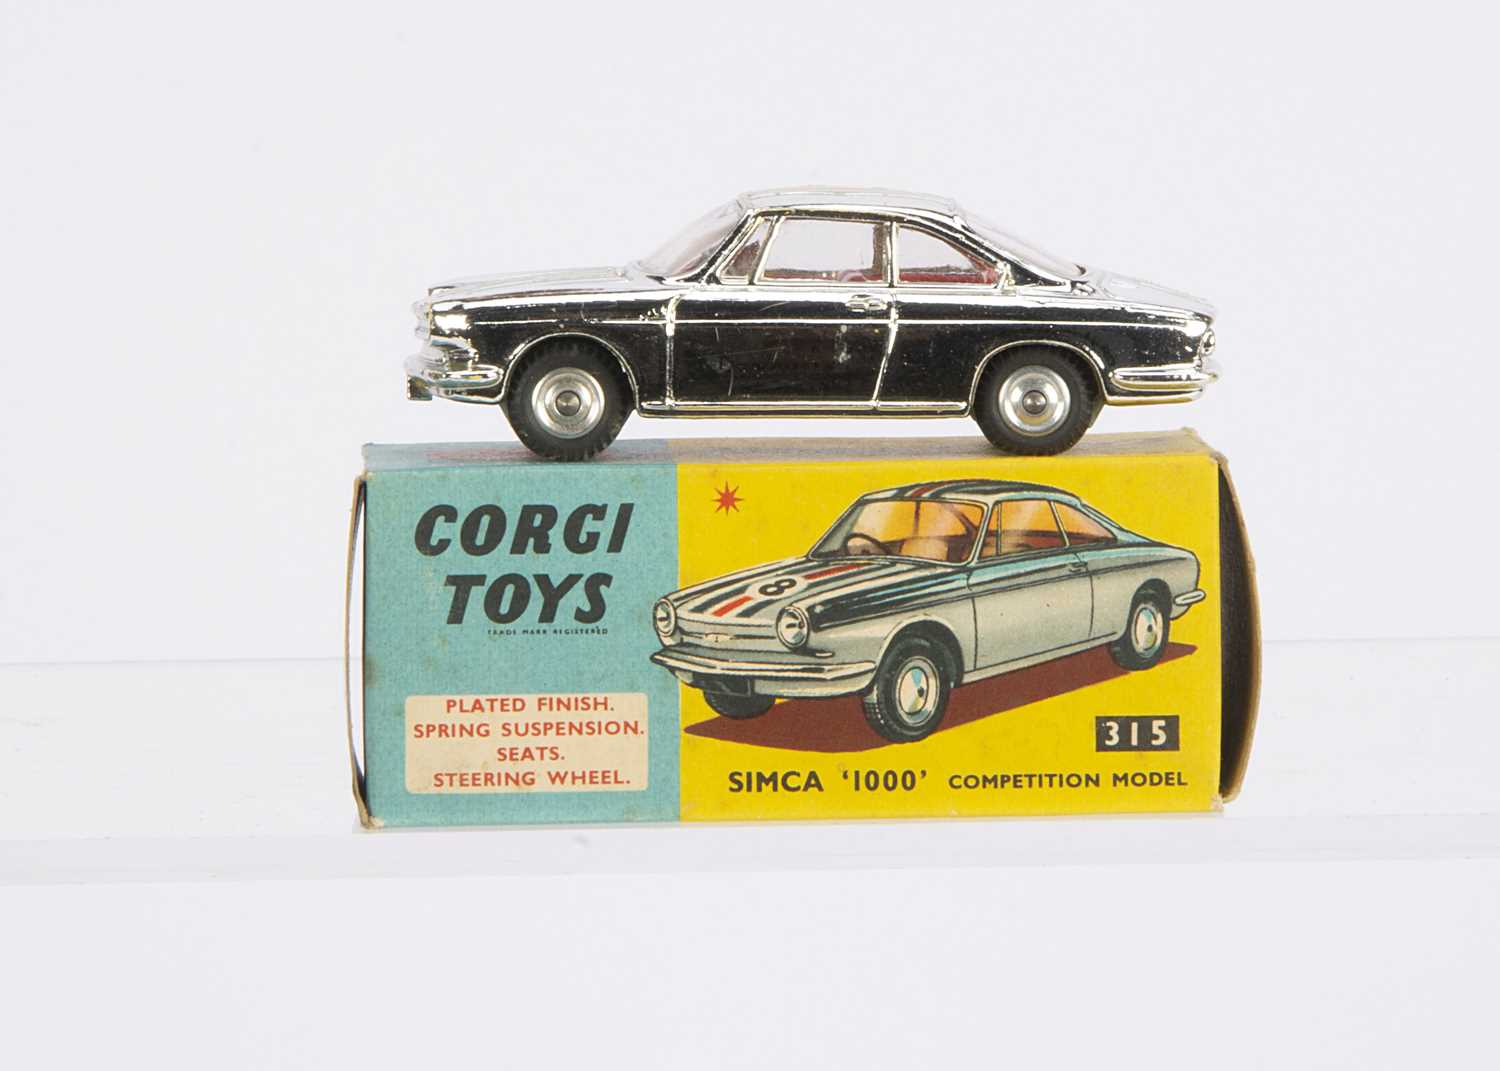 Lot 39 - A Corgi Toys 315 Simca 1000 Competition Model